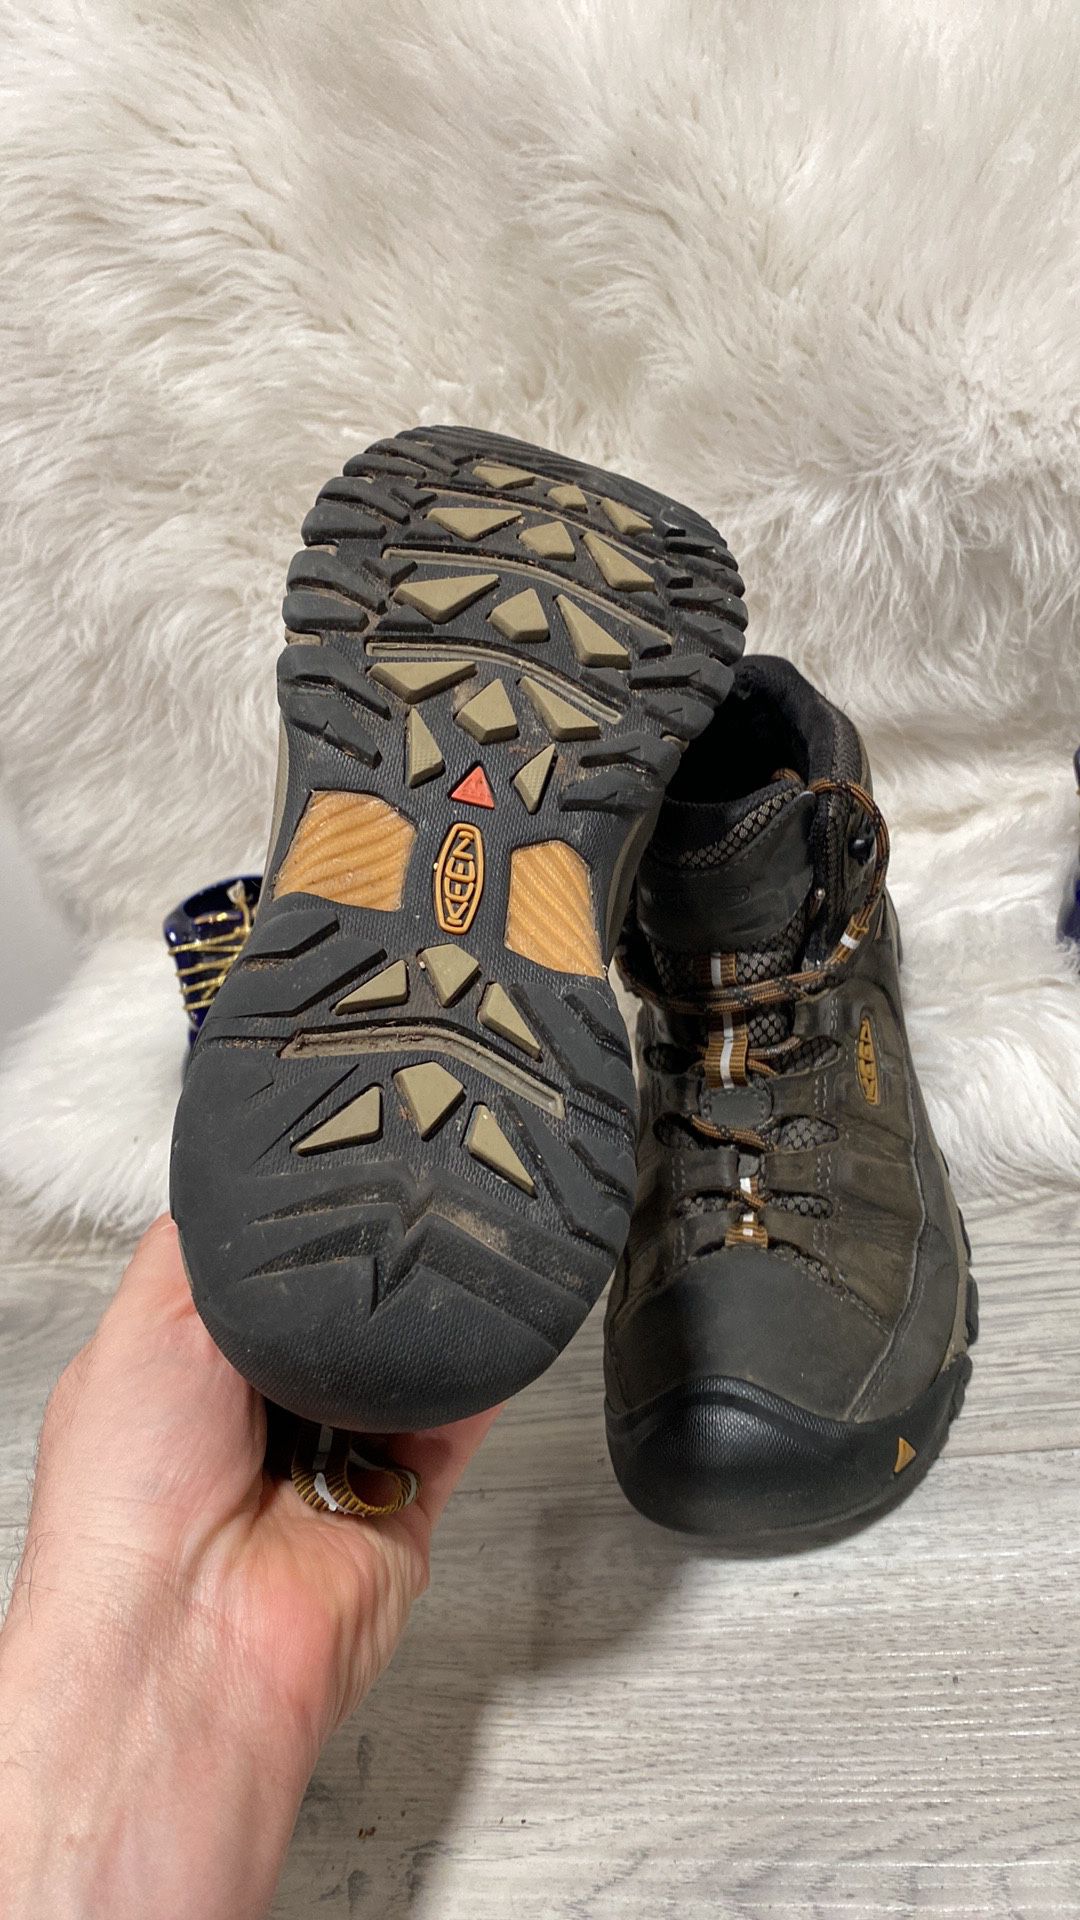 Keen Mens Targhee III Waterproof Mid Boots Size 9.5